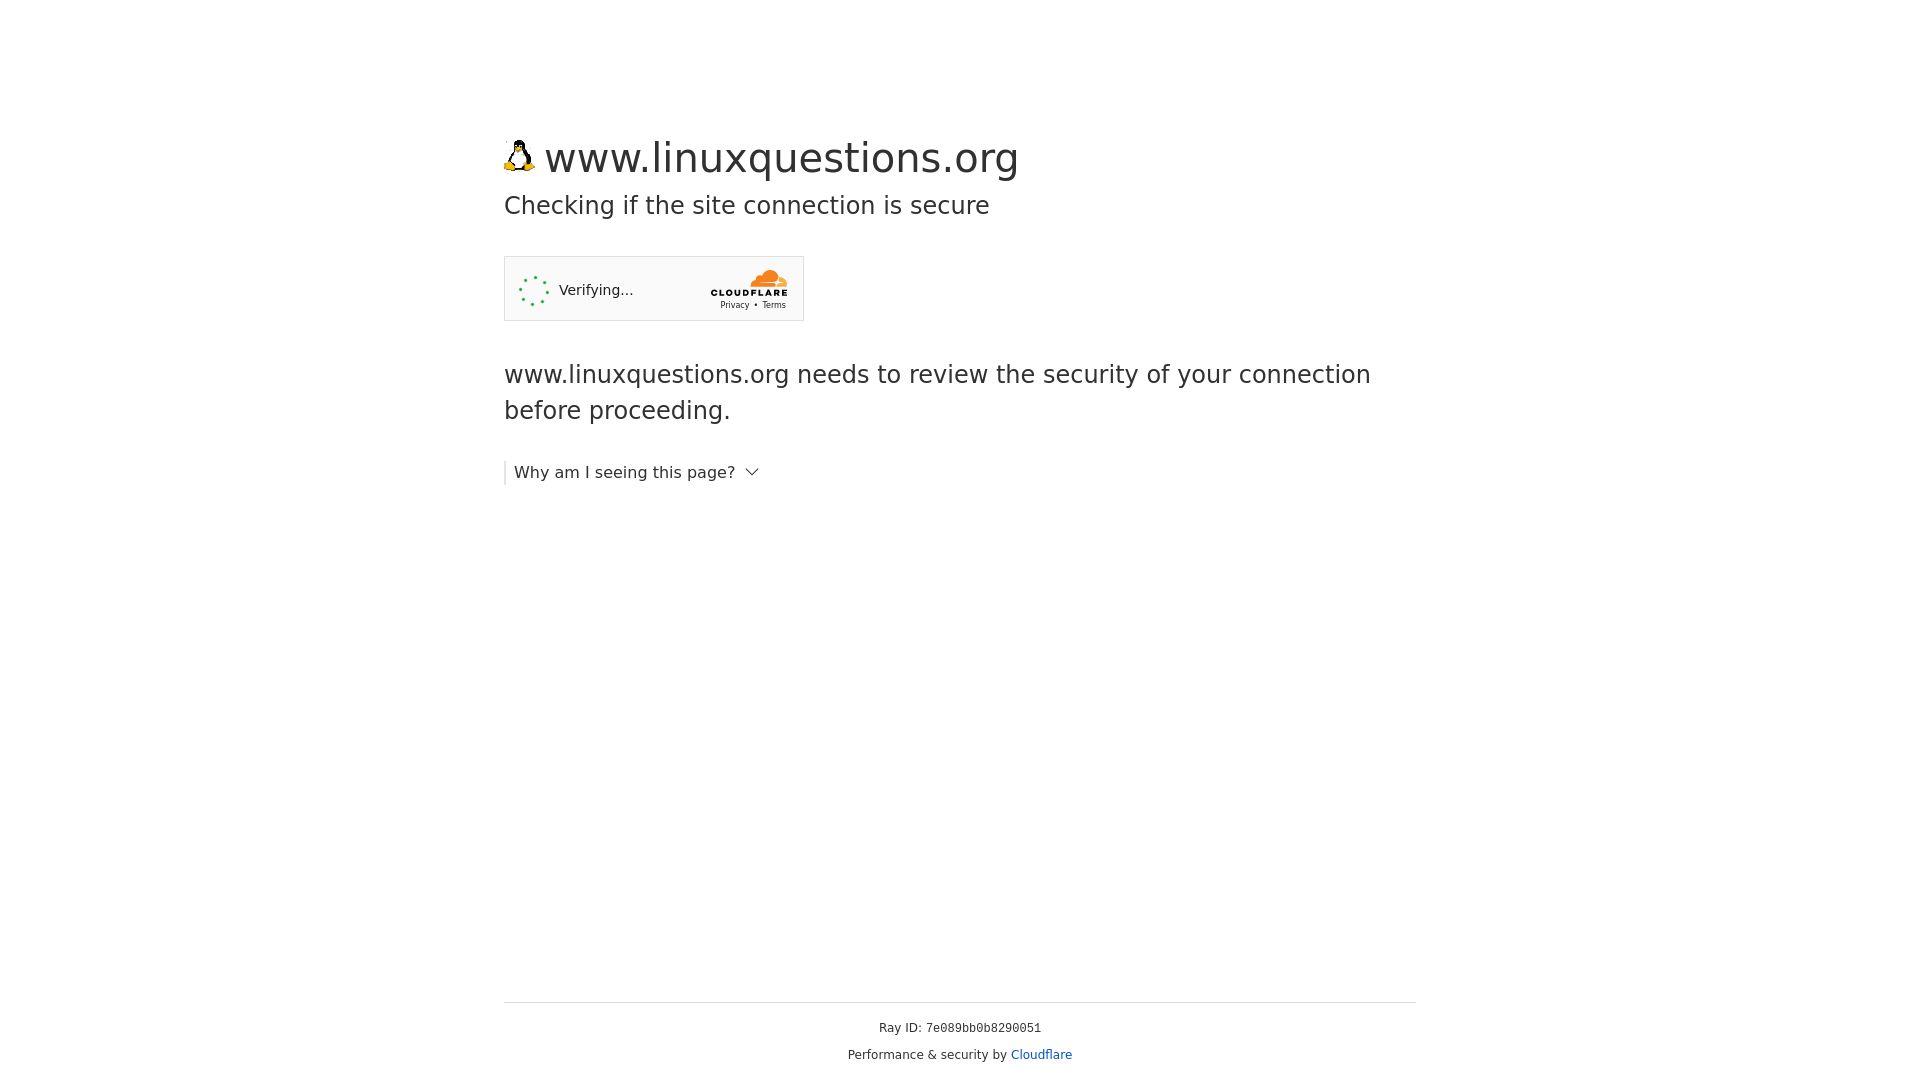 Webseitenstatus linuxquestions.org ist   ONLINE